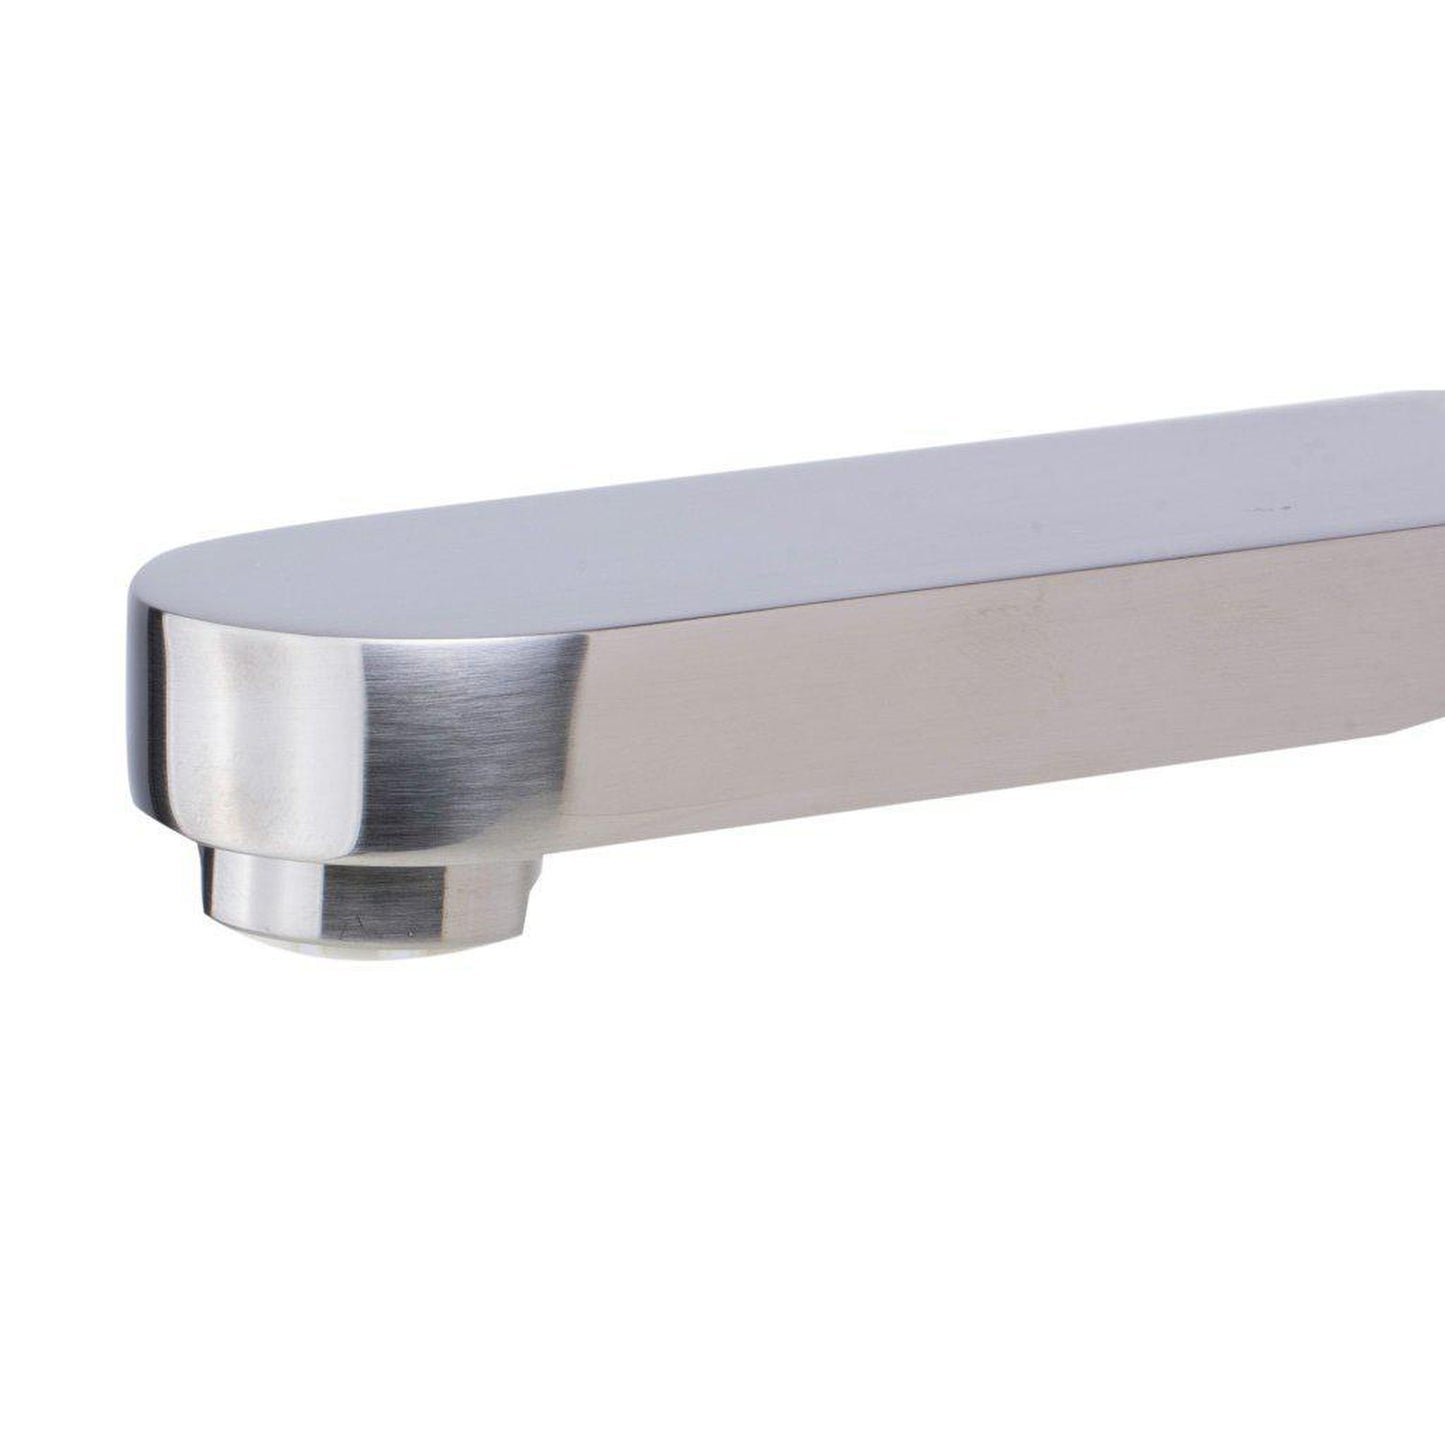 ALFI Brand AB2201-BN Brushed Nickel Wall-mounted Tub Filler Bathroom Spout